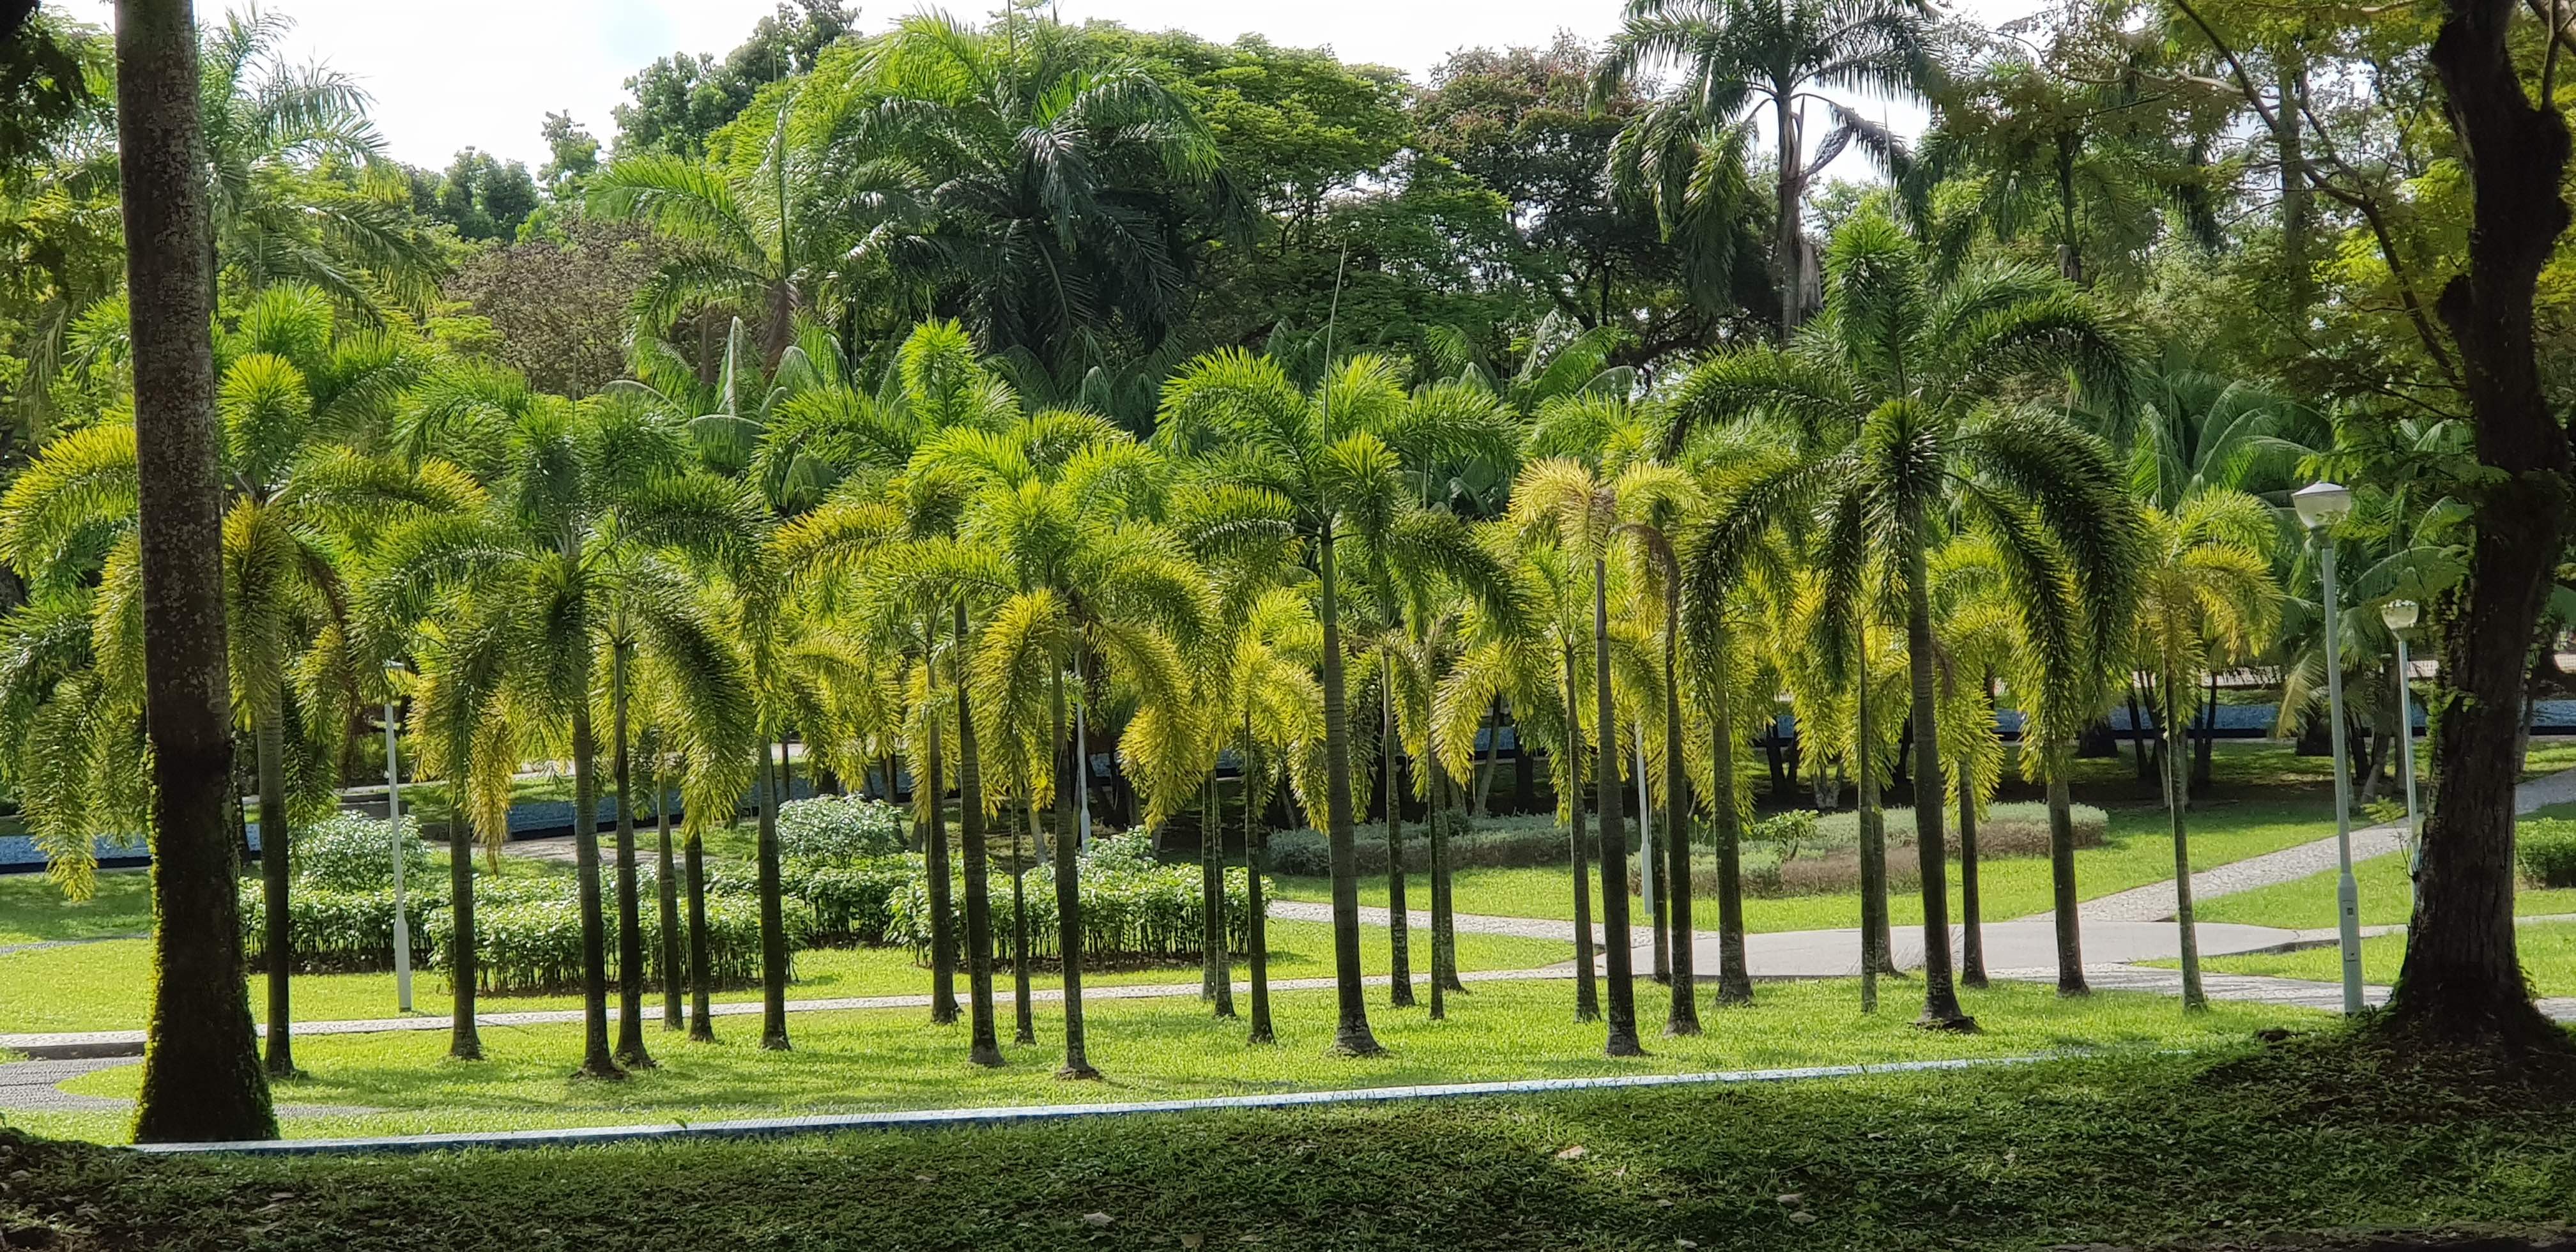 Seeds of Cuban Royal Palm - ROYSTONEA REGIA - The Original Garden